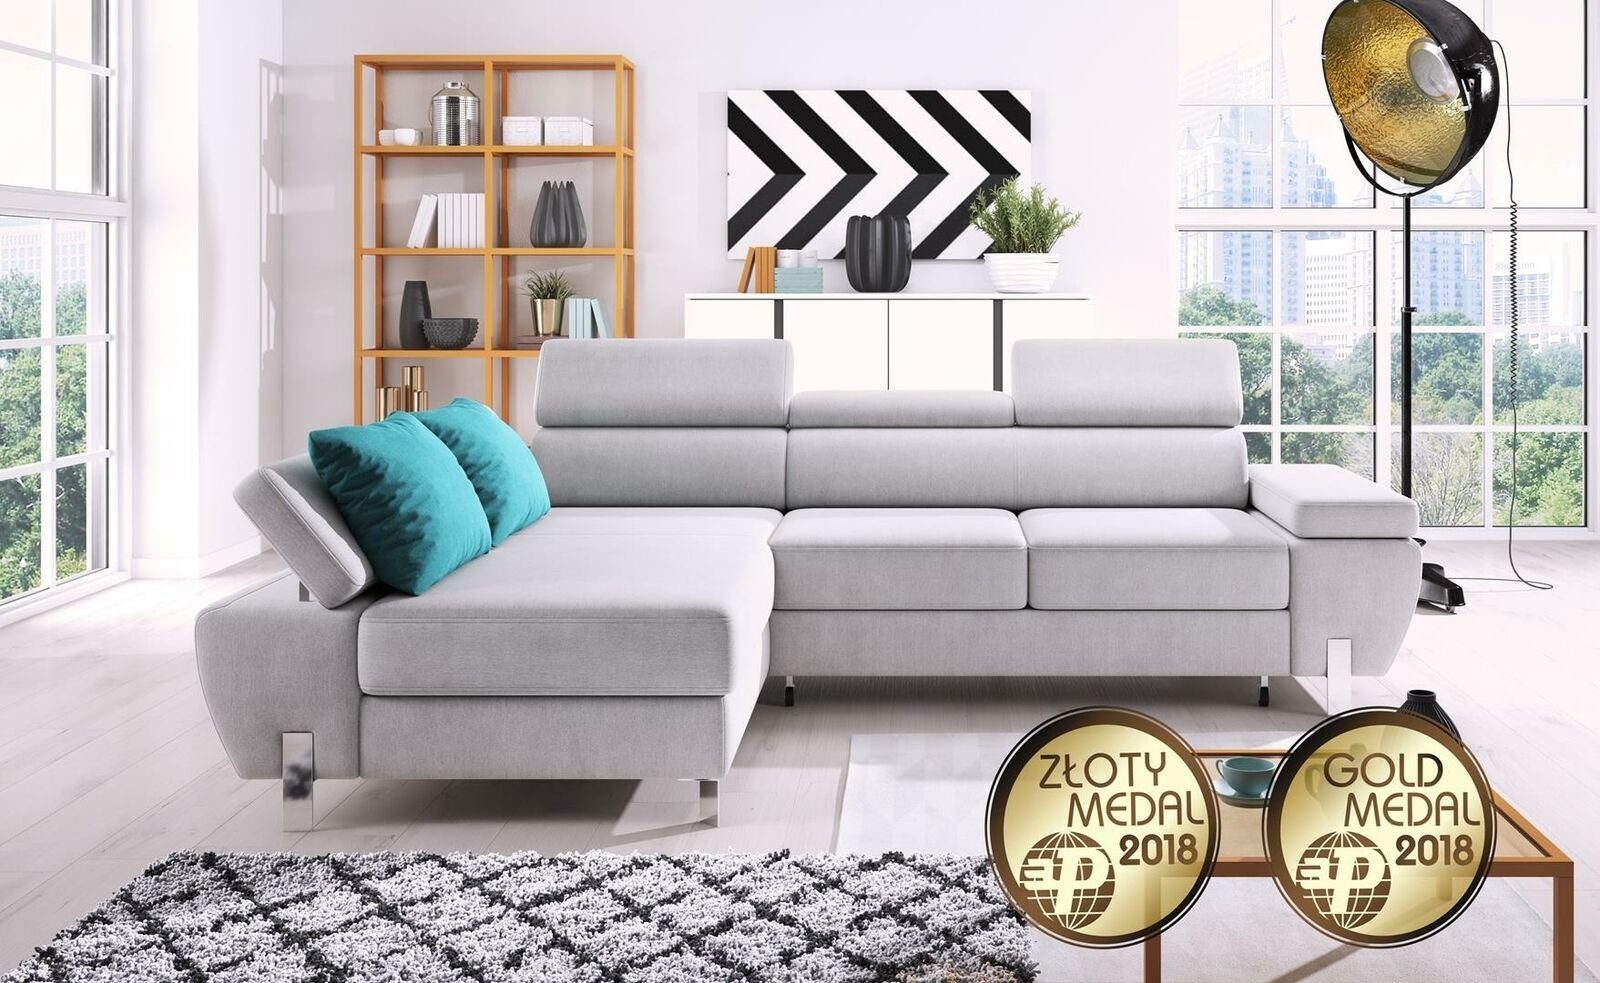 JVmoebel Ecksofa Schlafsofa Design Ecksofa L-form Bettfunktion Couch Textil Sofas, Mit Bettfunktion Grau